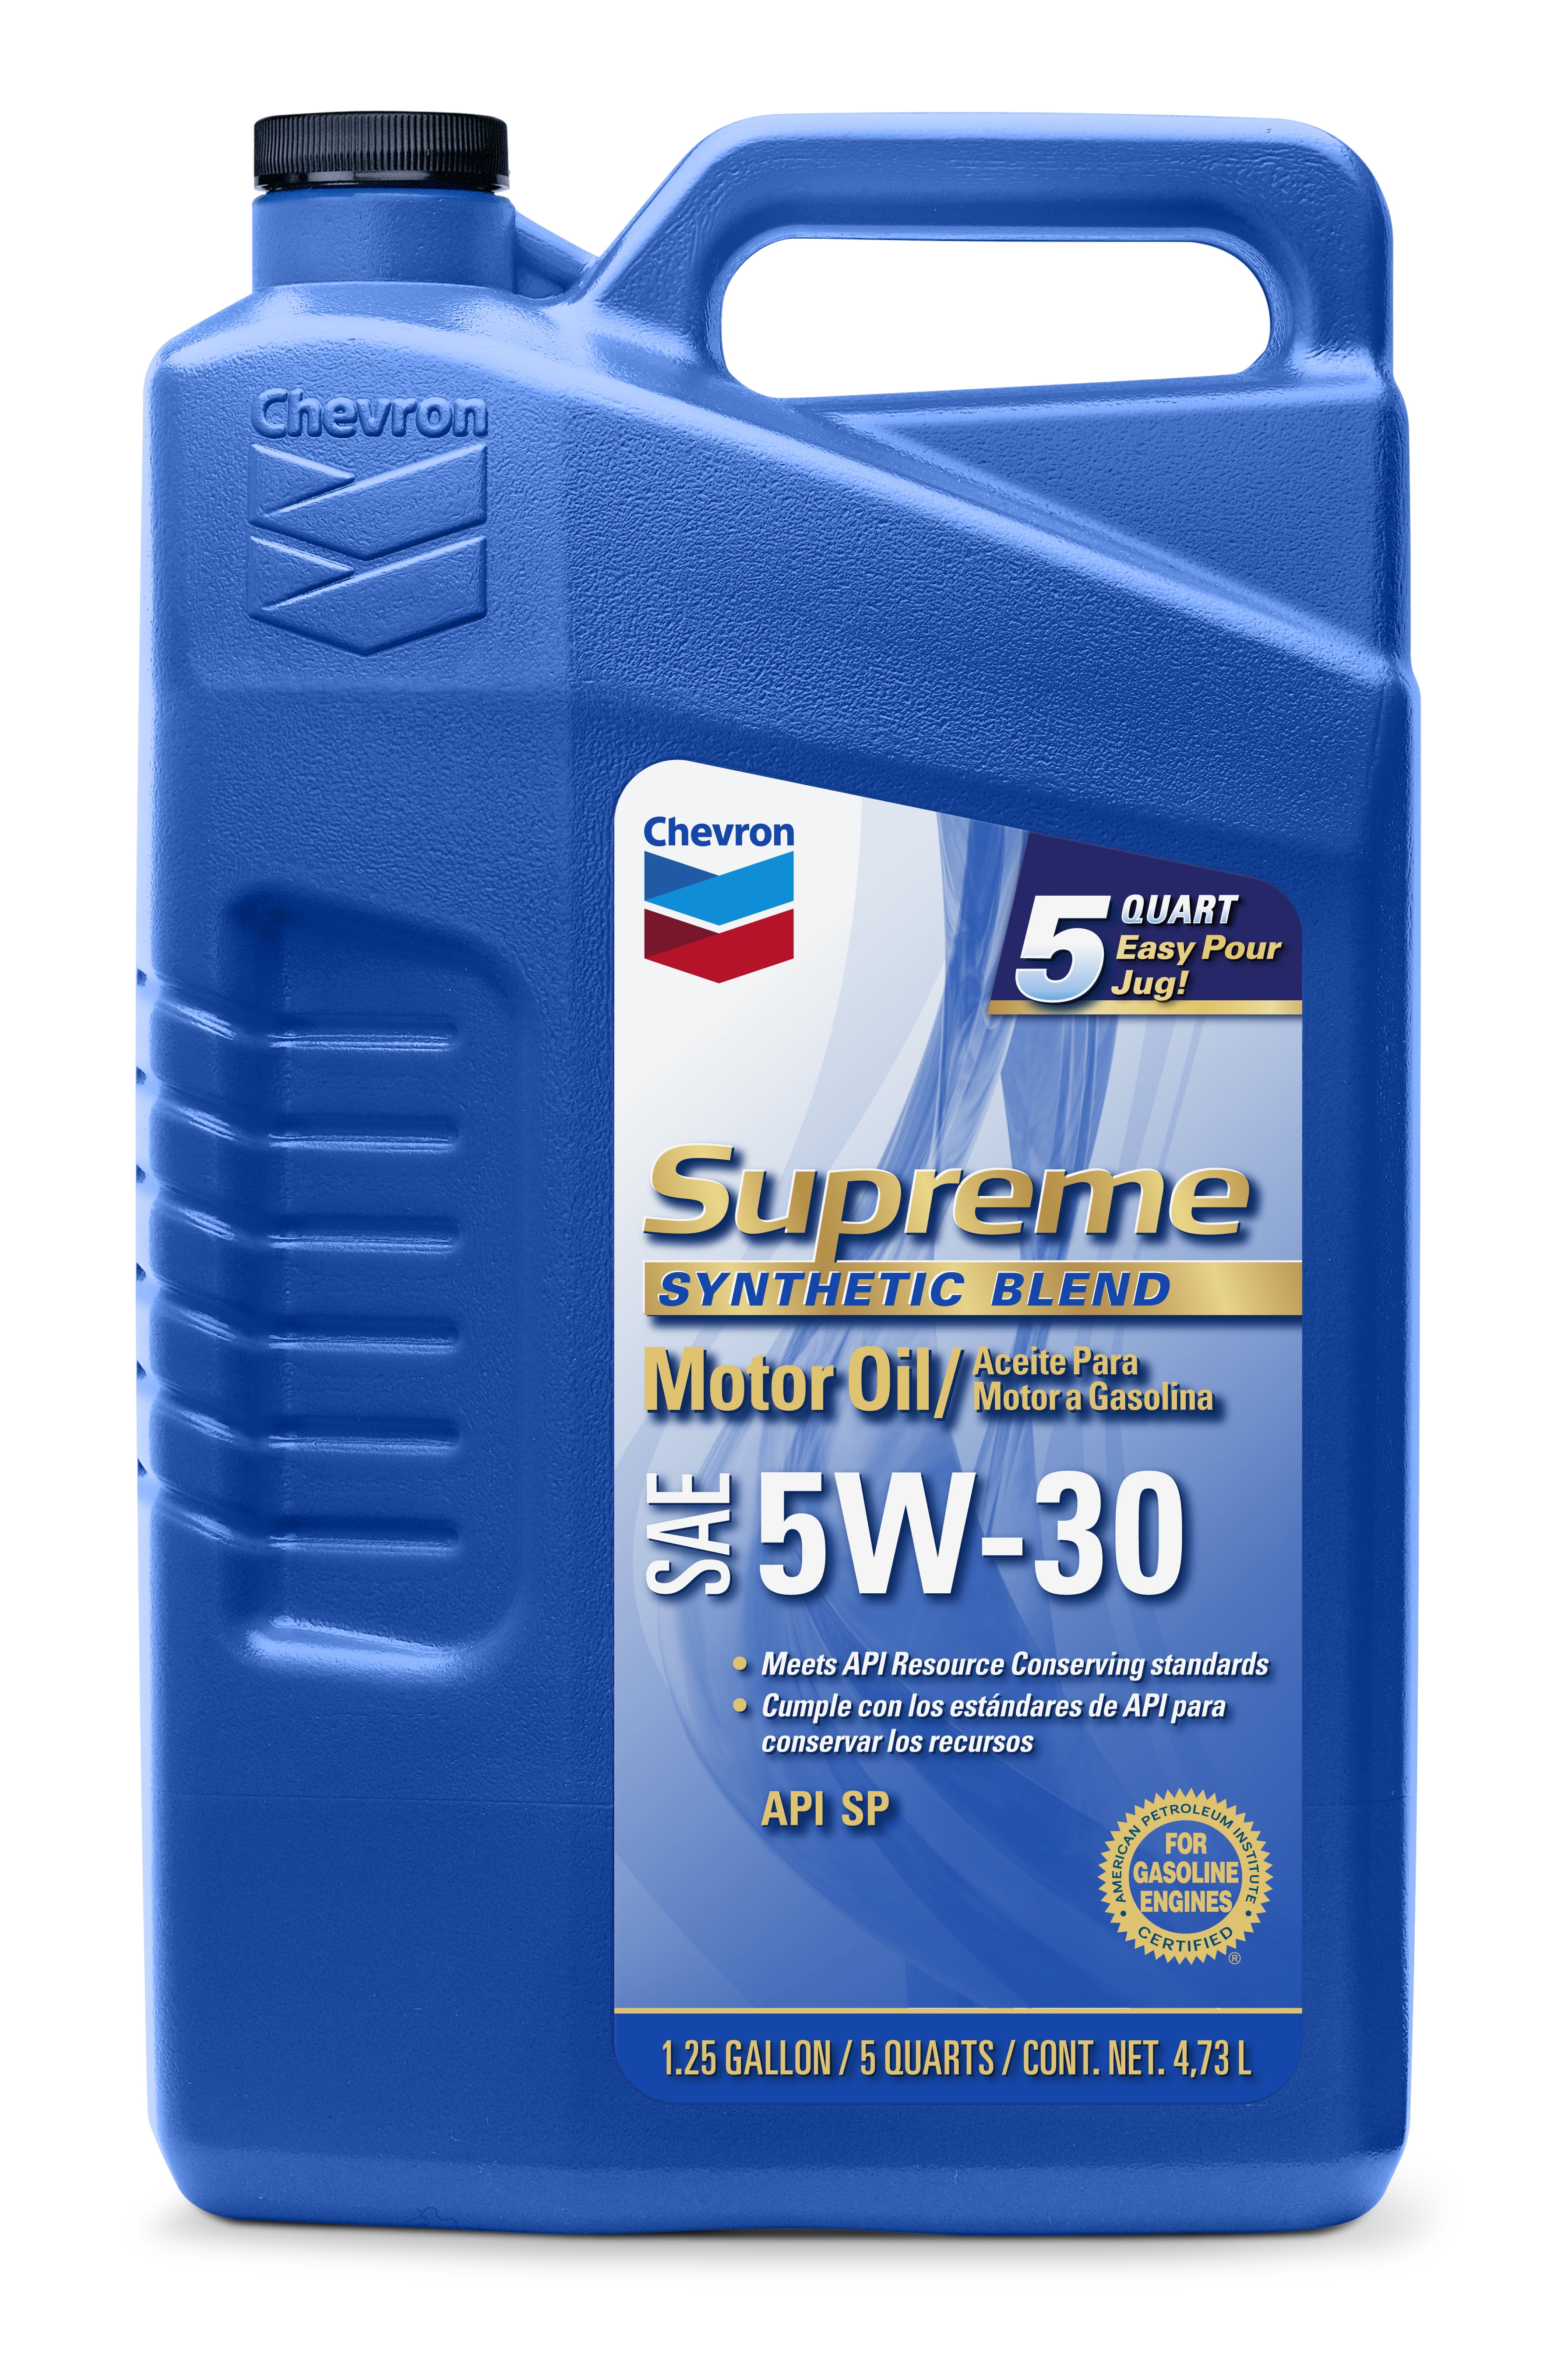 chevron-supreme-synthetic-blend-motor-oil-5w30-5-quart-walmart